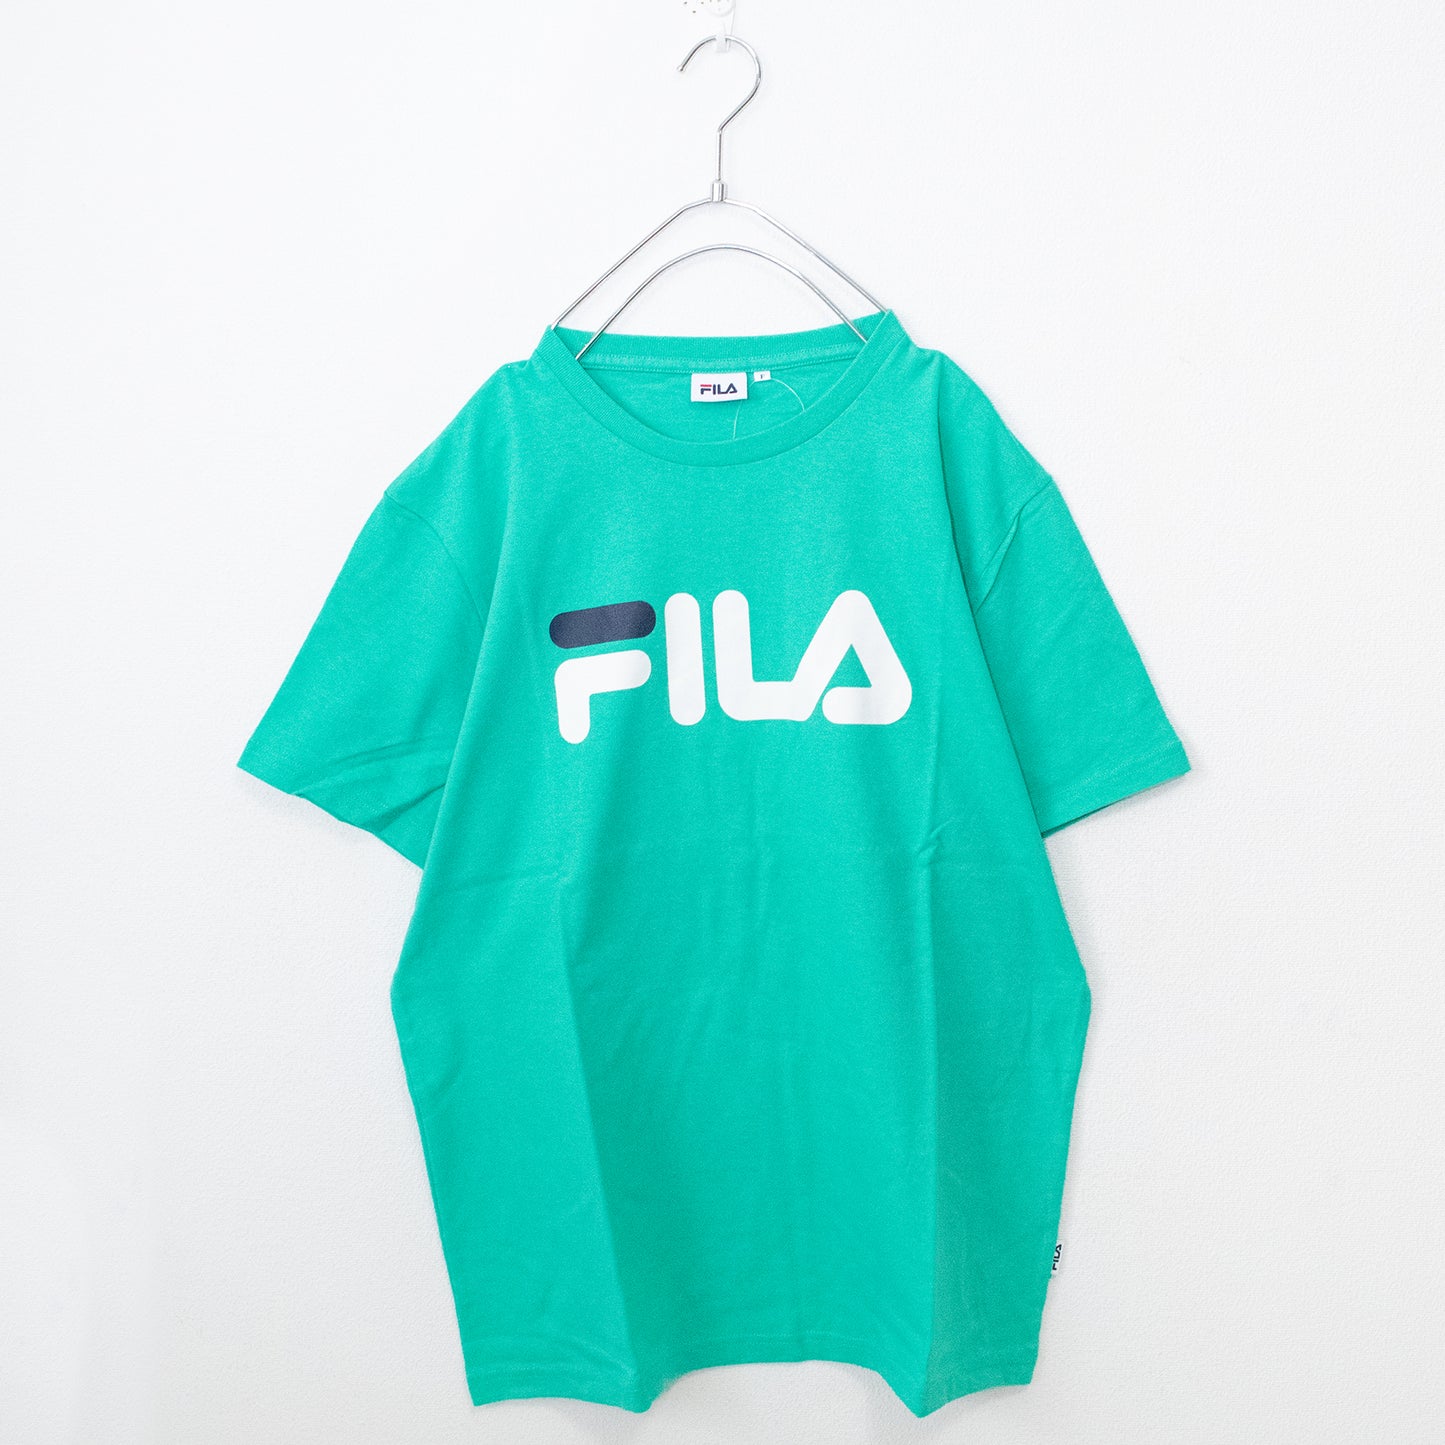 FILA BTS着用モデル Tシャツ Turquoise Blue